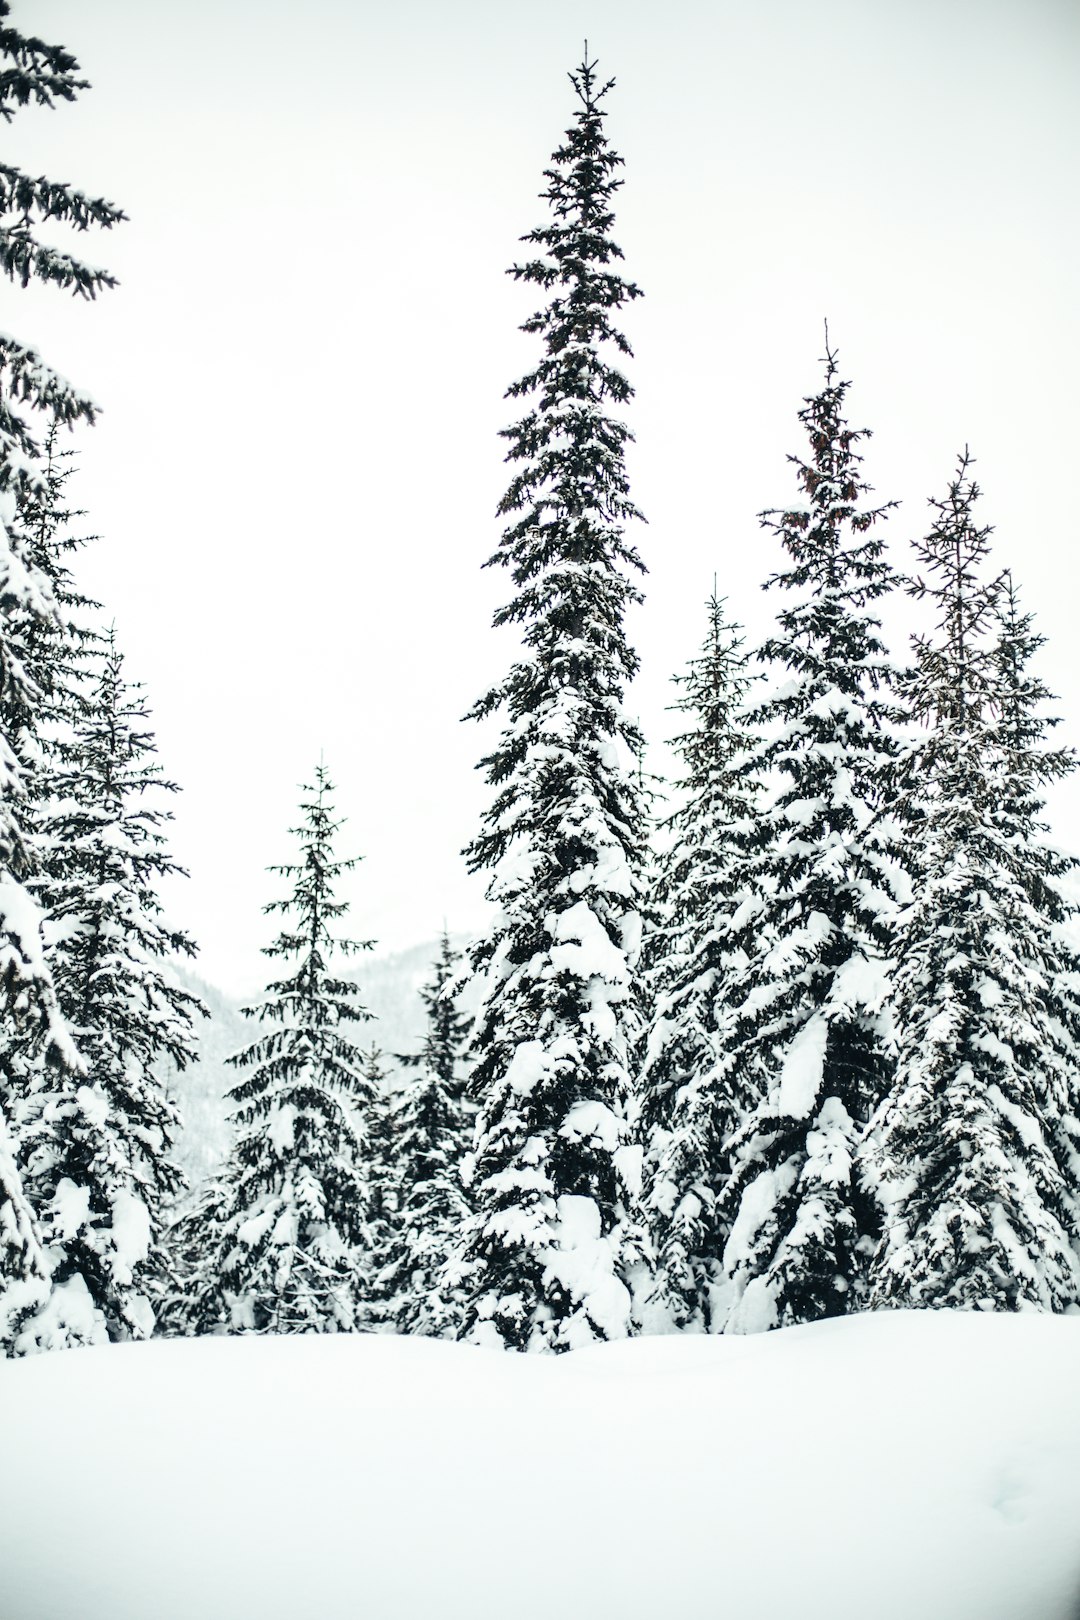 Spruce-fir forest photo spot British Columbia Canada